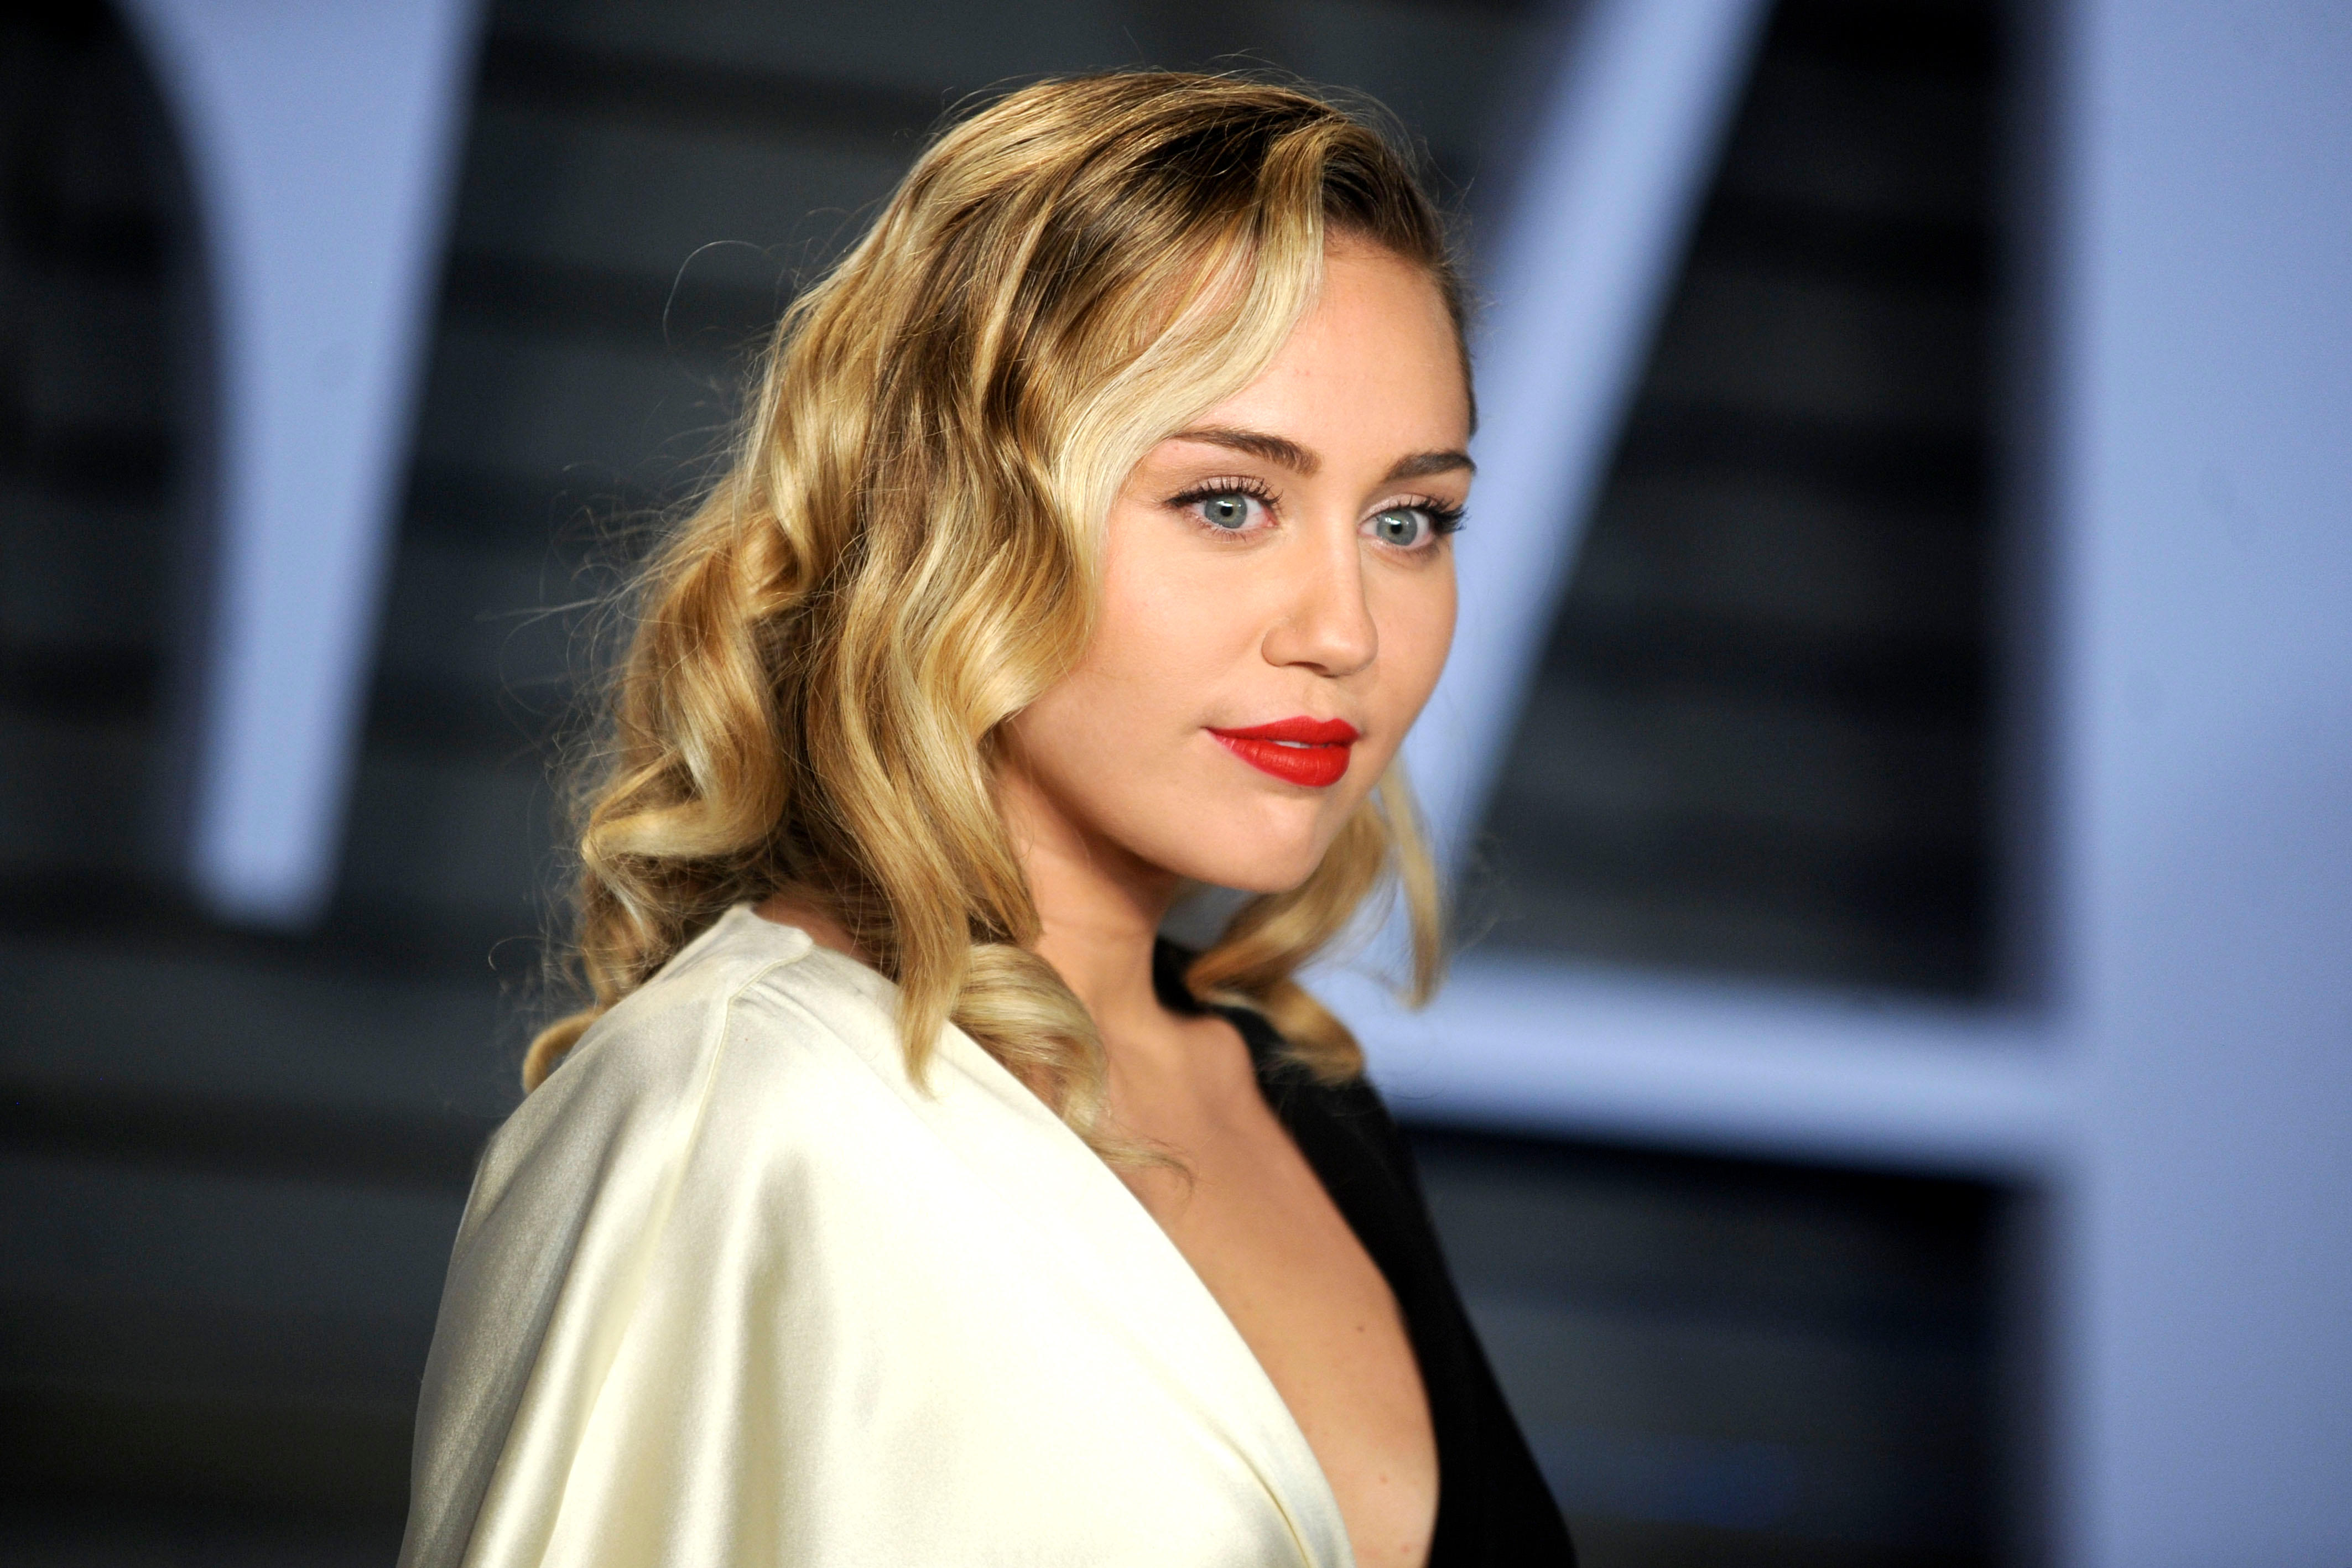 Miley Cyrus at the 2018 Vanity Fair Oscar party